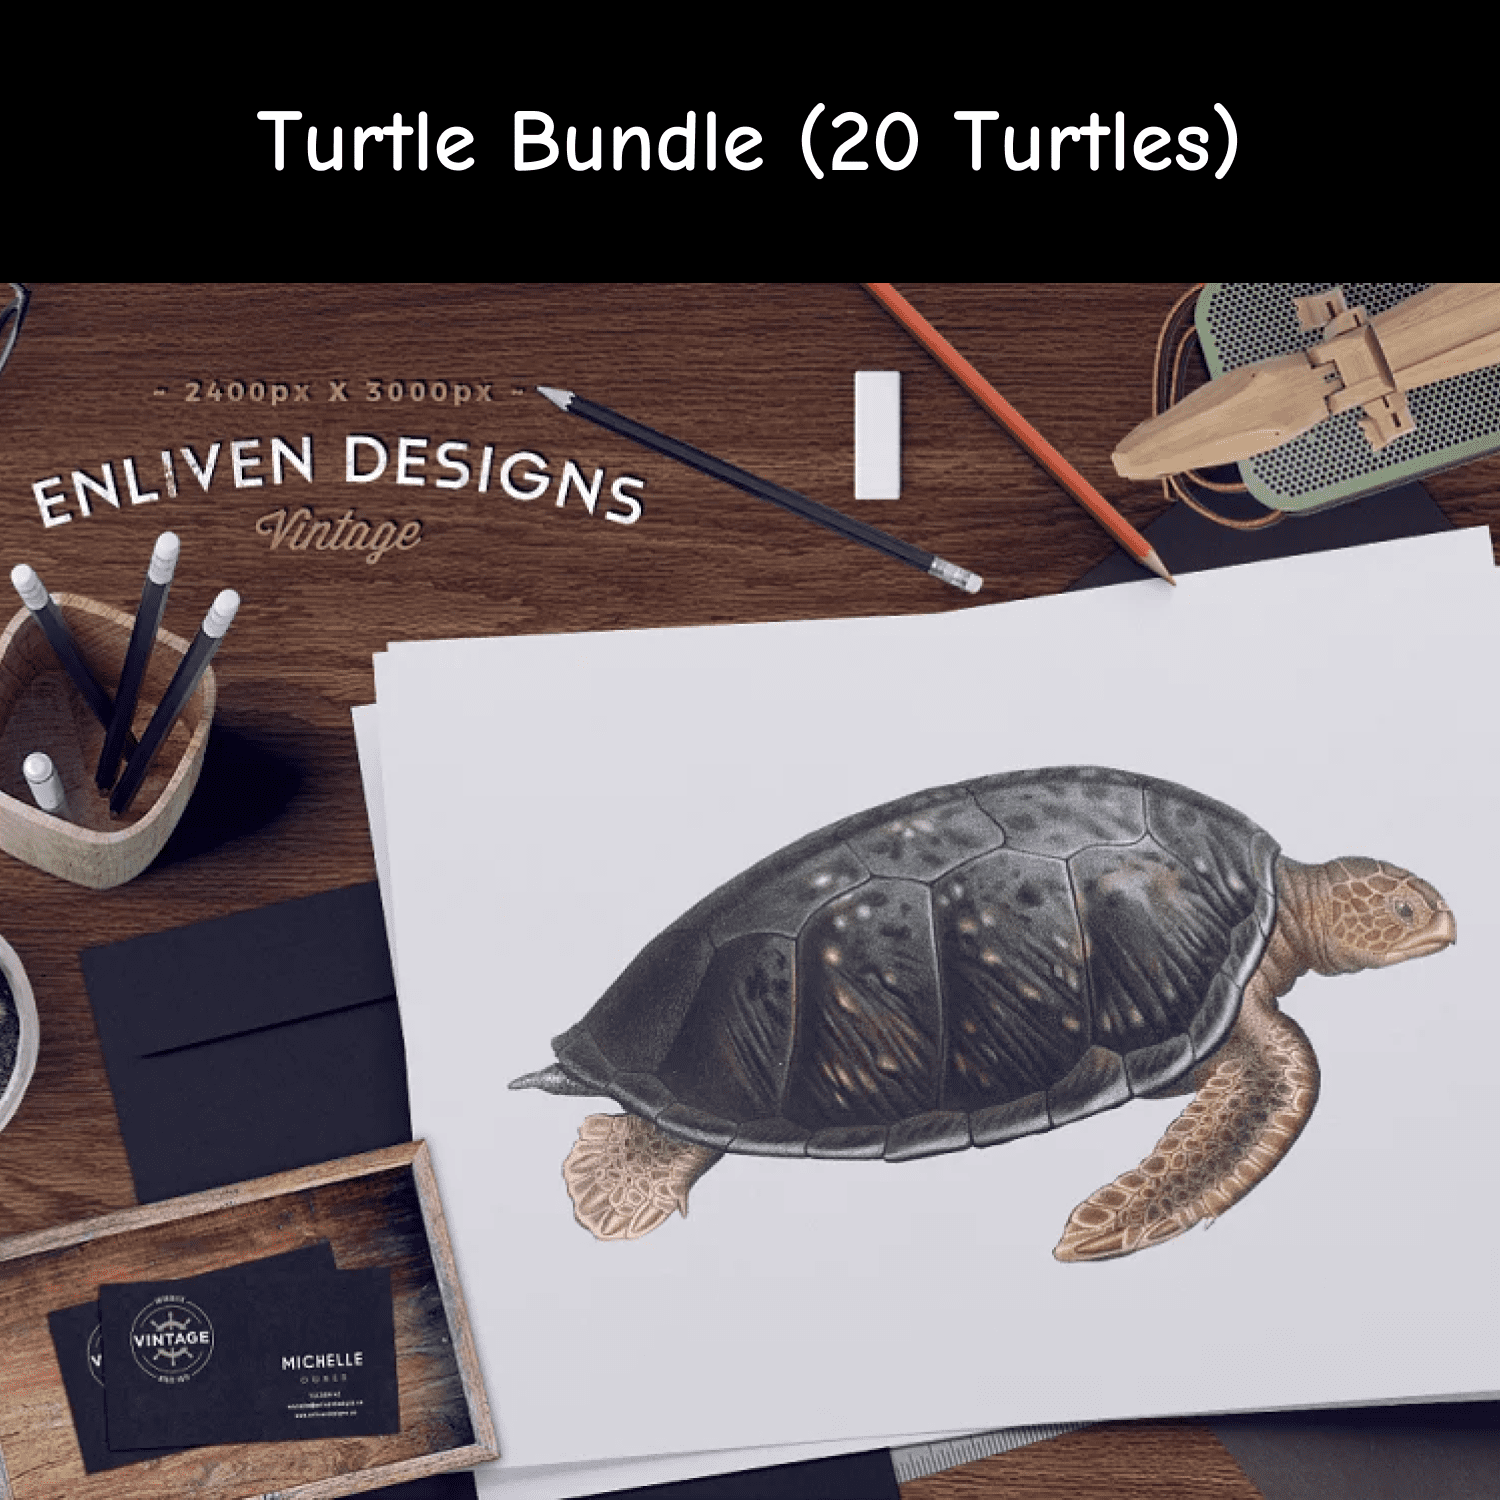 Turtle Bundle (20 Turtles) cover.